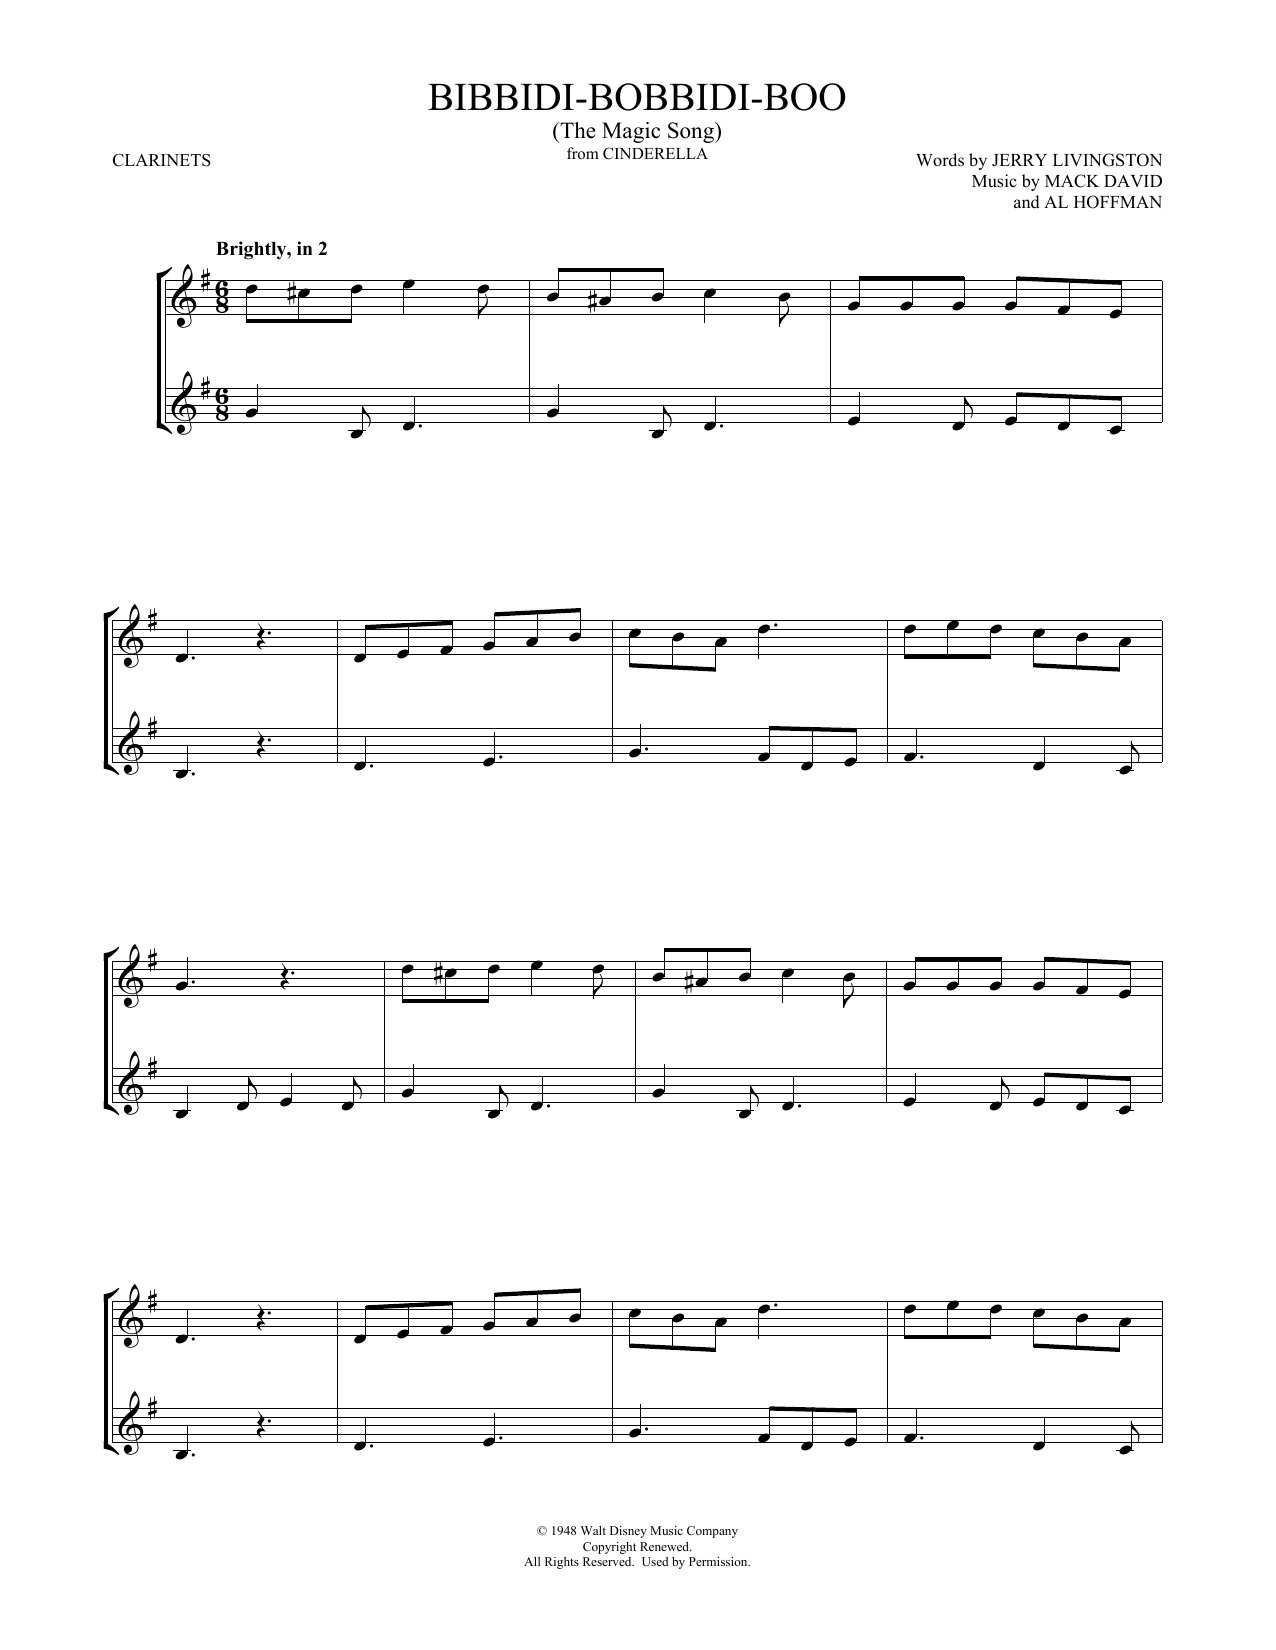 Verna Felton Bibbidi-Bobbidi-Boo (The Magic Song) (from Cinderella) Sheet Music Notes & Chords for Clarinet Duet - Download or Print PDF